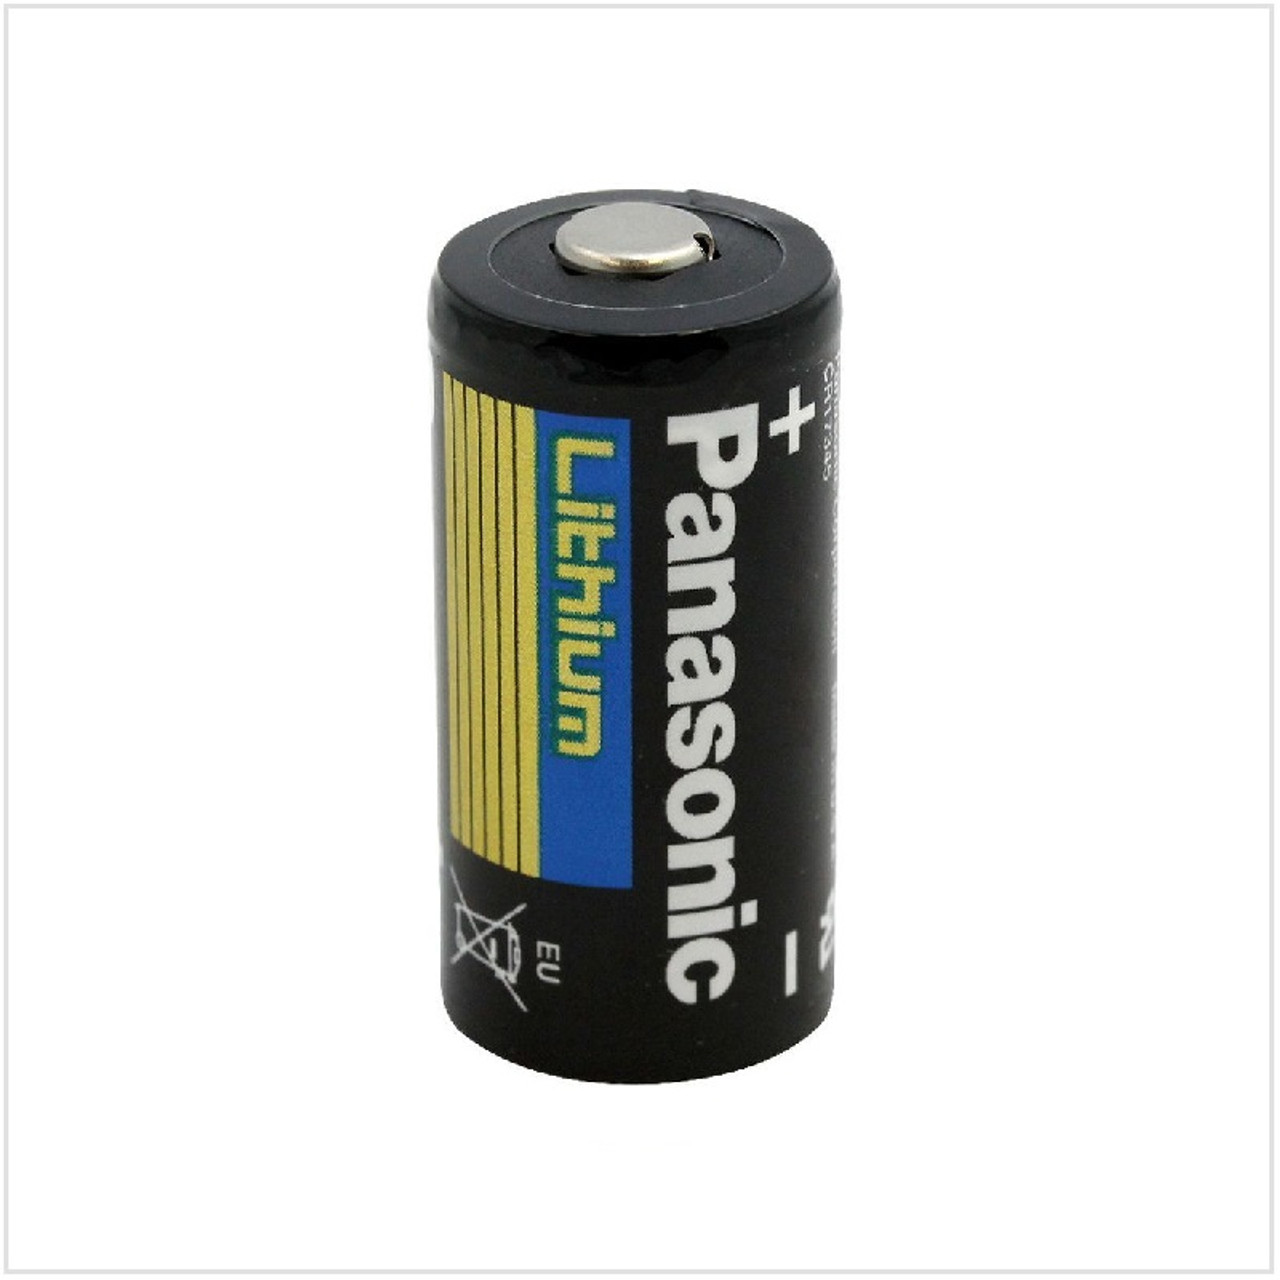 CR123A Panasonic Battery